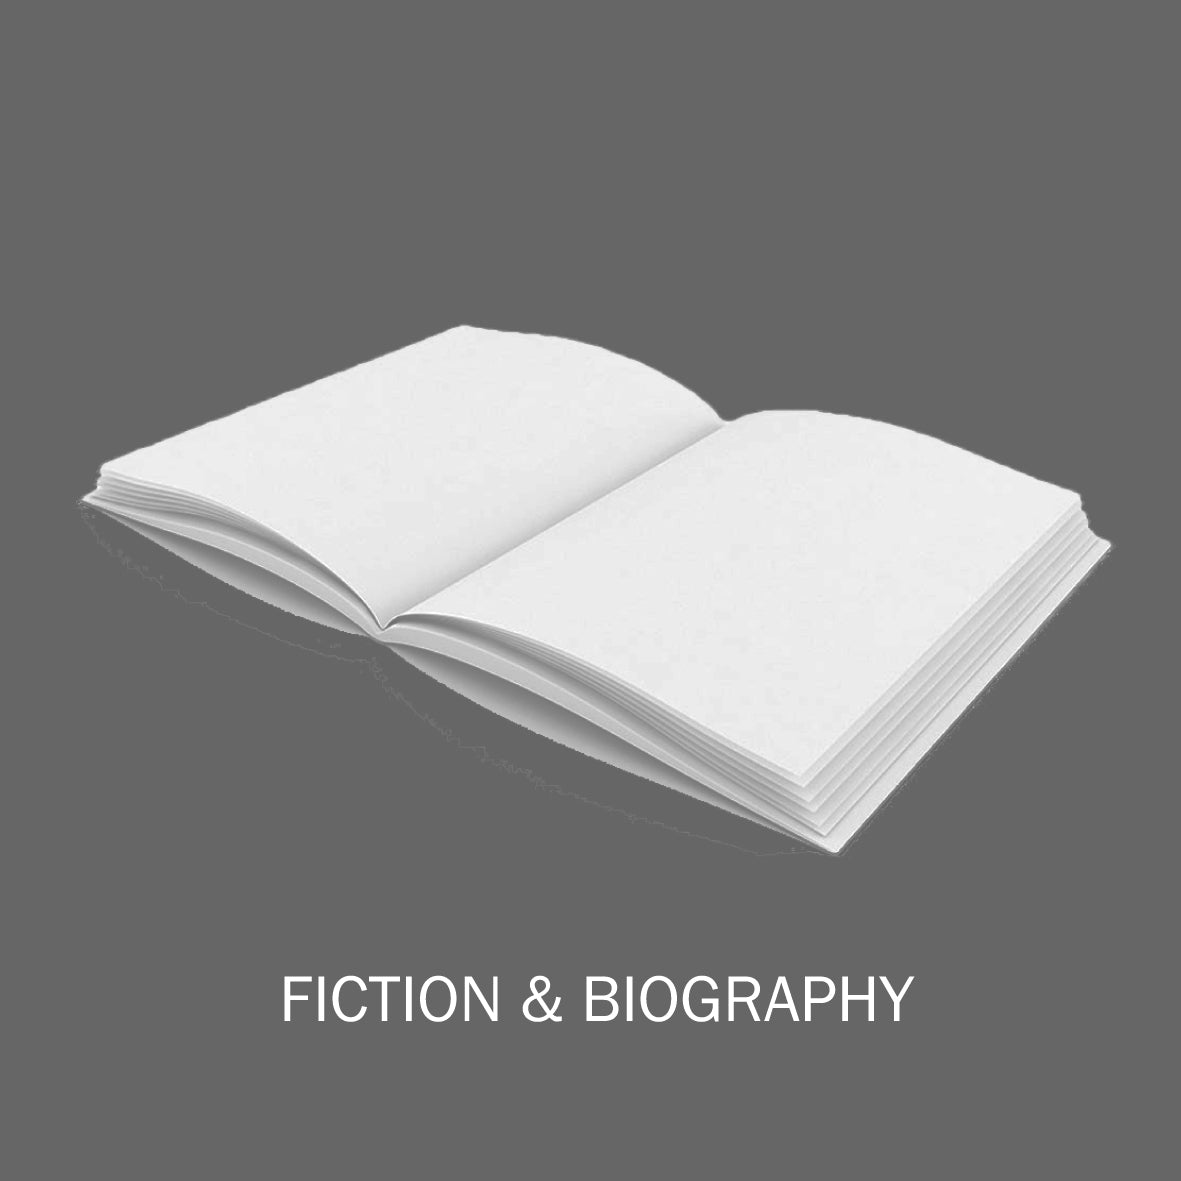 Fiction & Biography